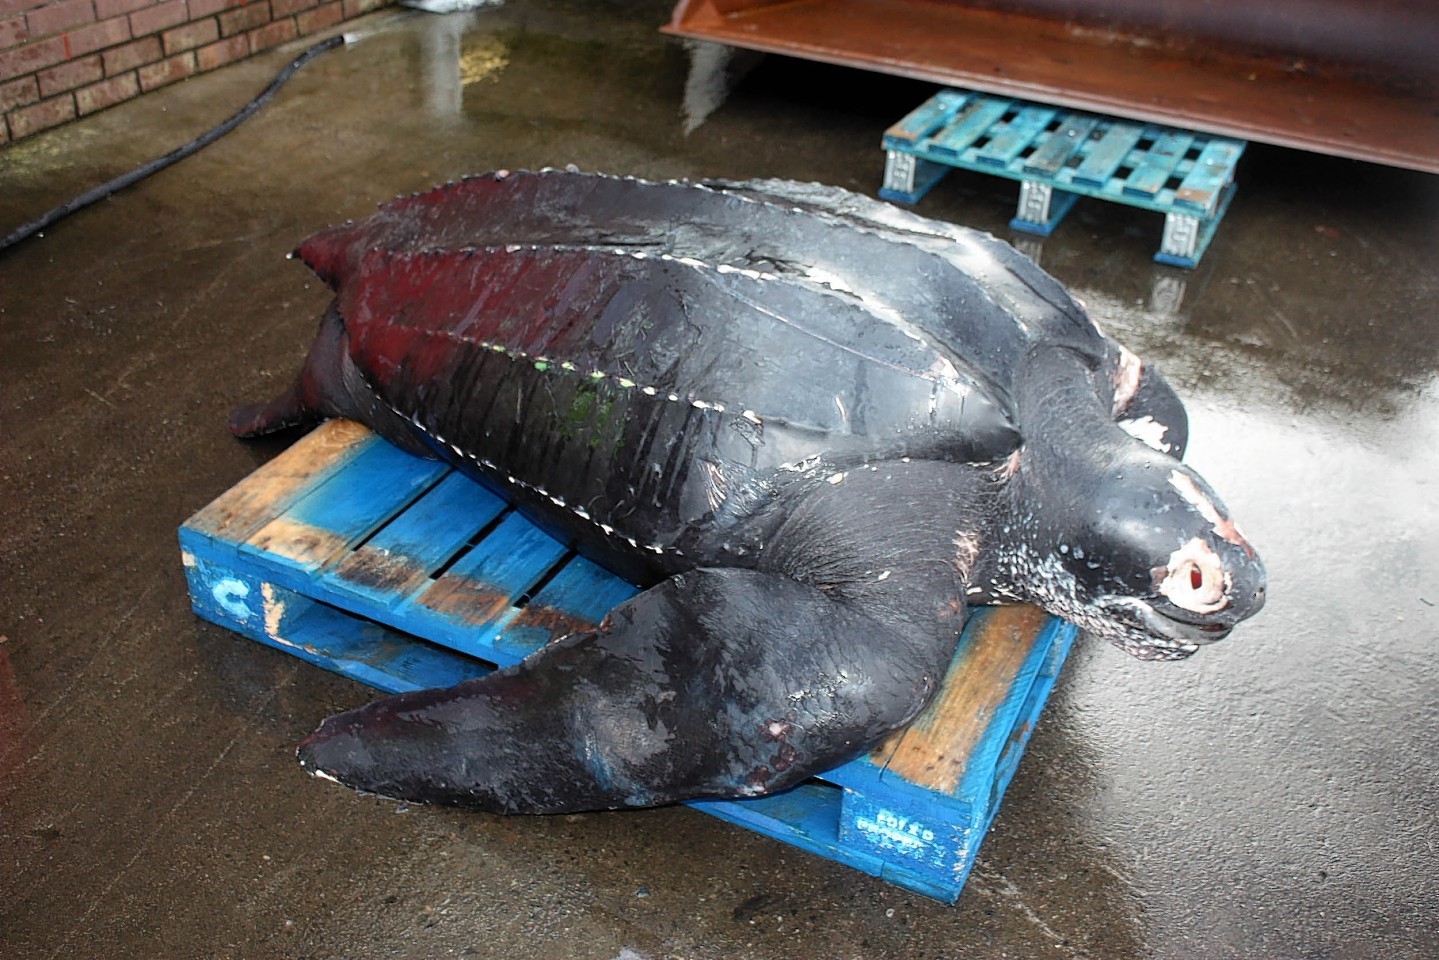 Giant Leatherback Turtle found dead off the Scottish coast